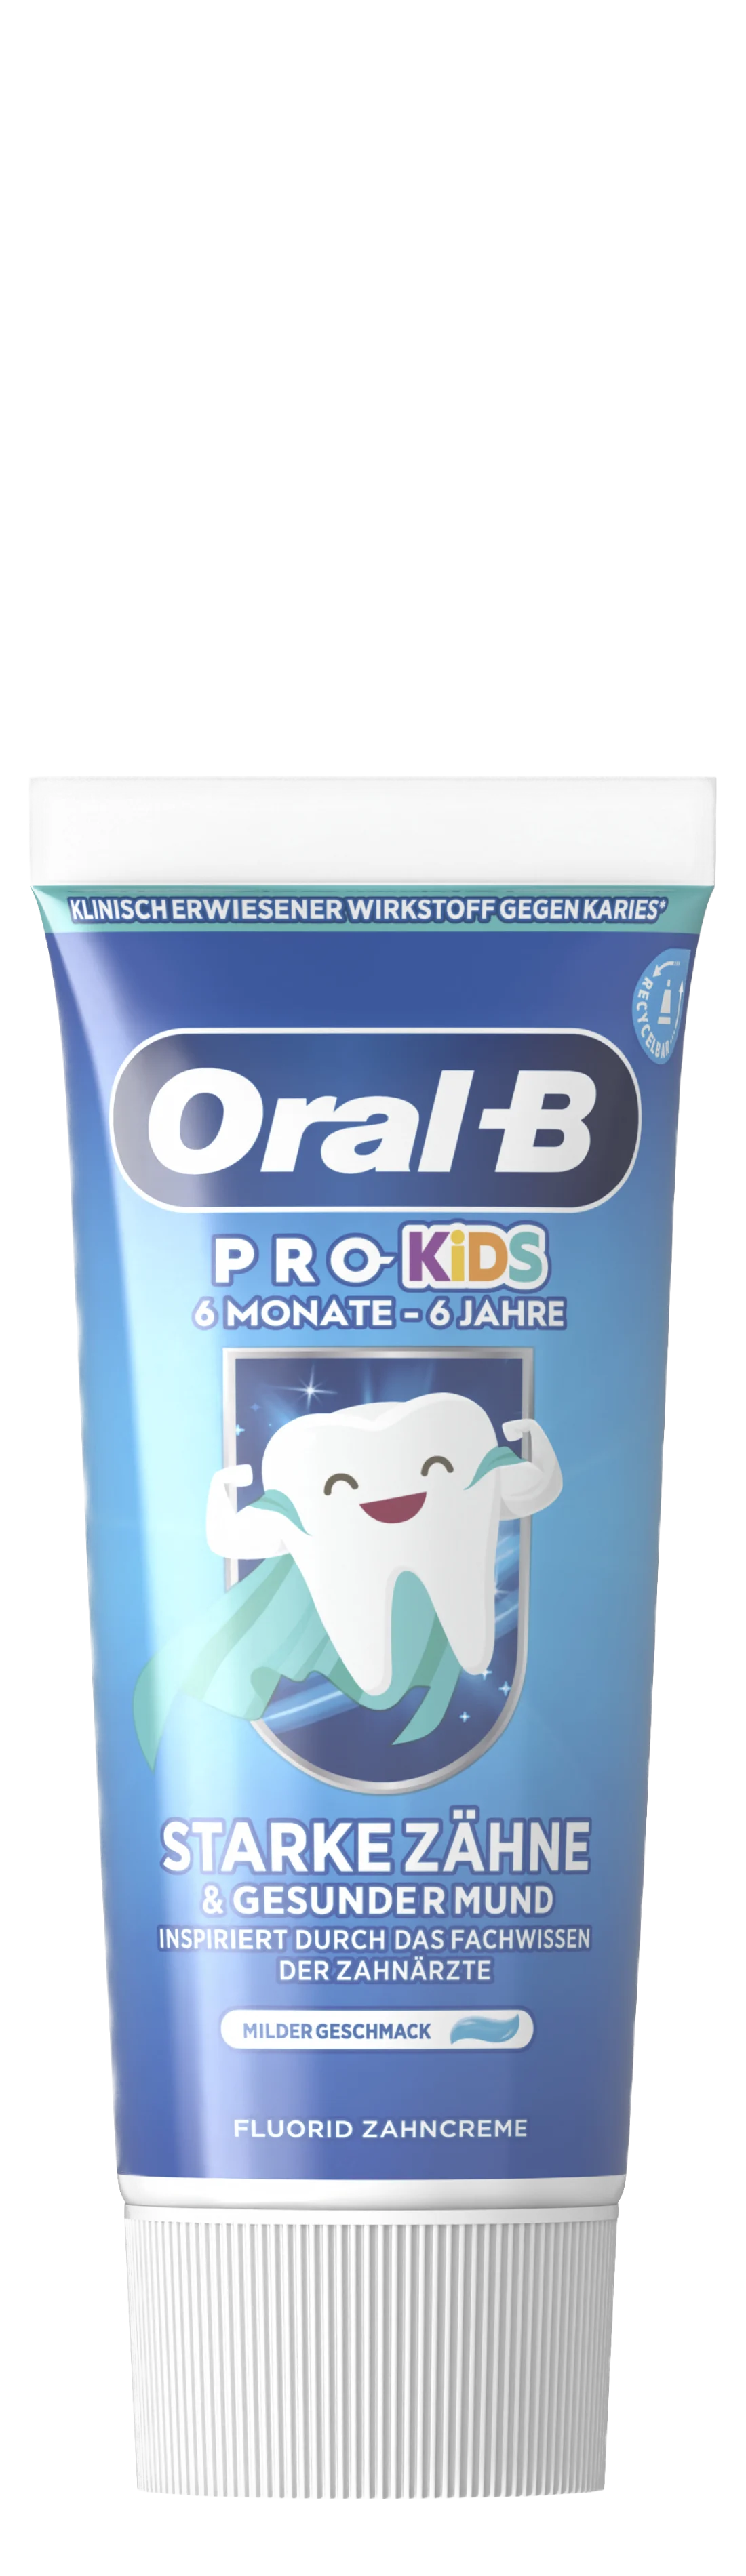 Oral-B Pro Kids Zahncreme, 6 Monate-6 Jahre - Main 